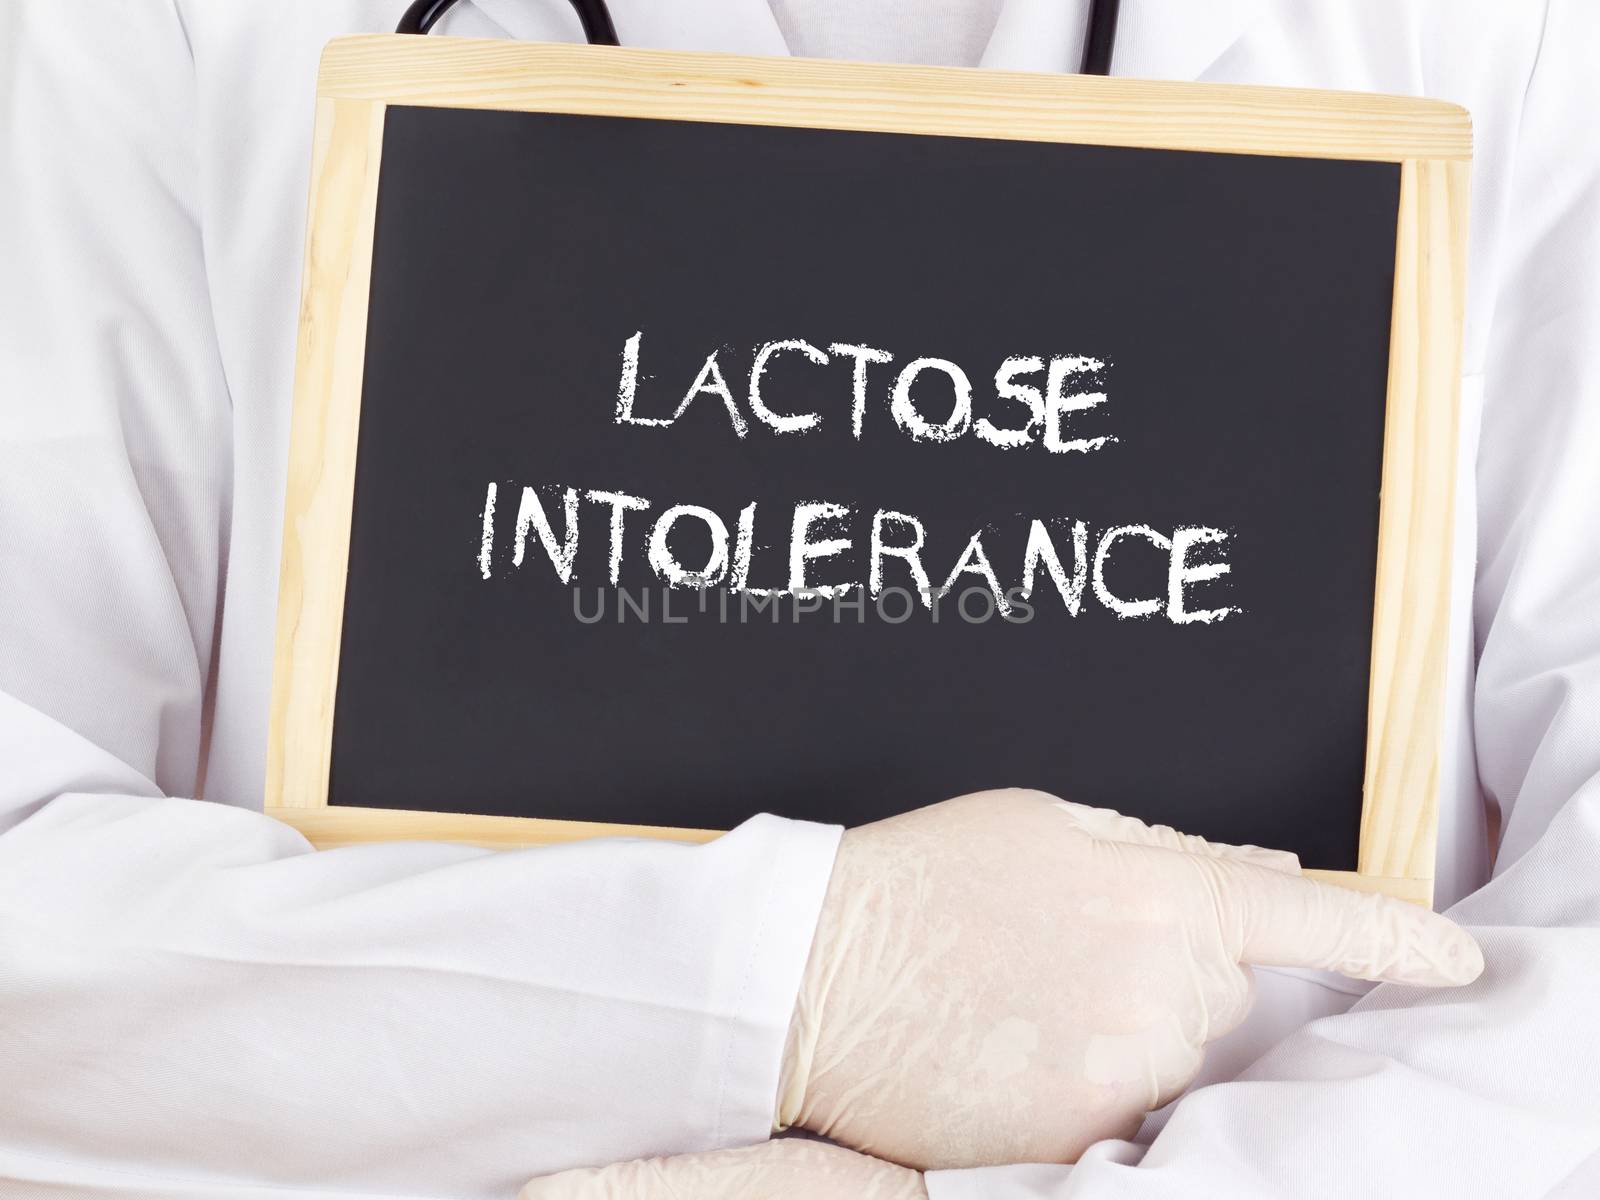 Doctor shows information on blackboard: lactose intolerance